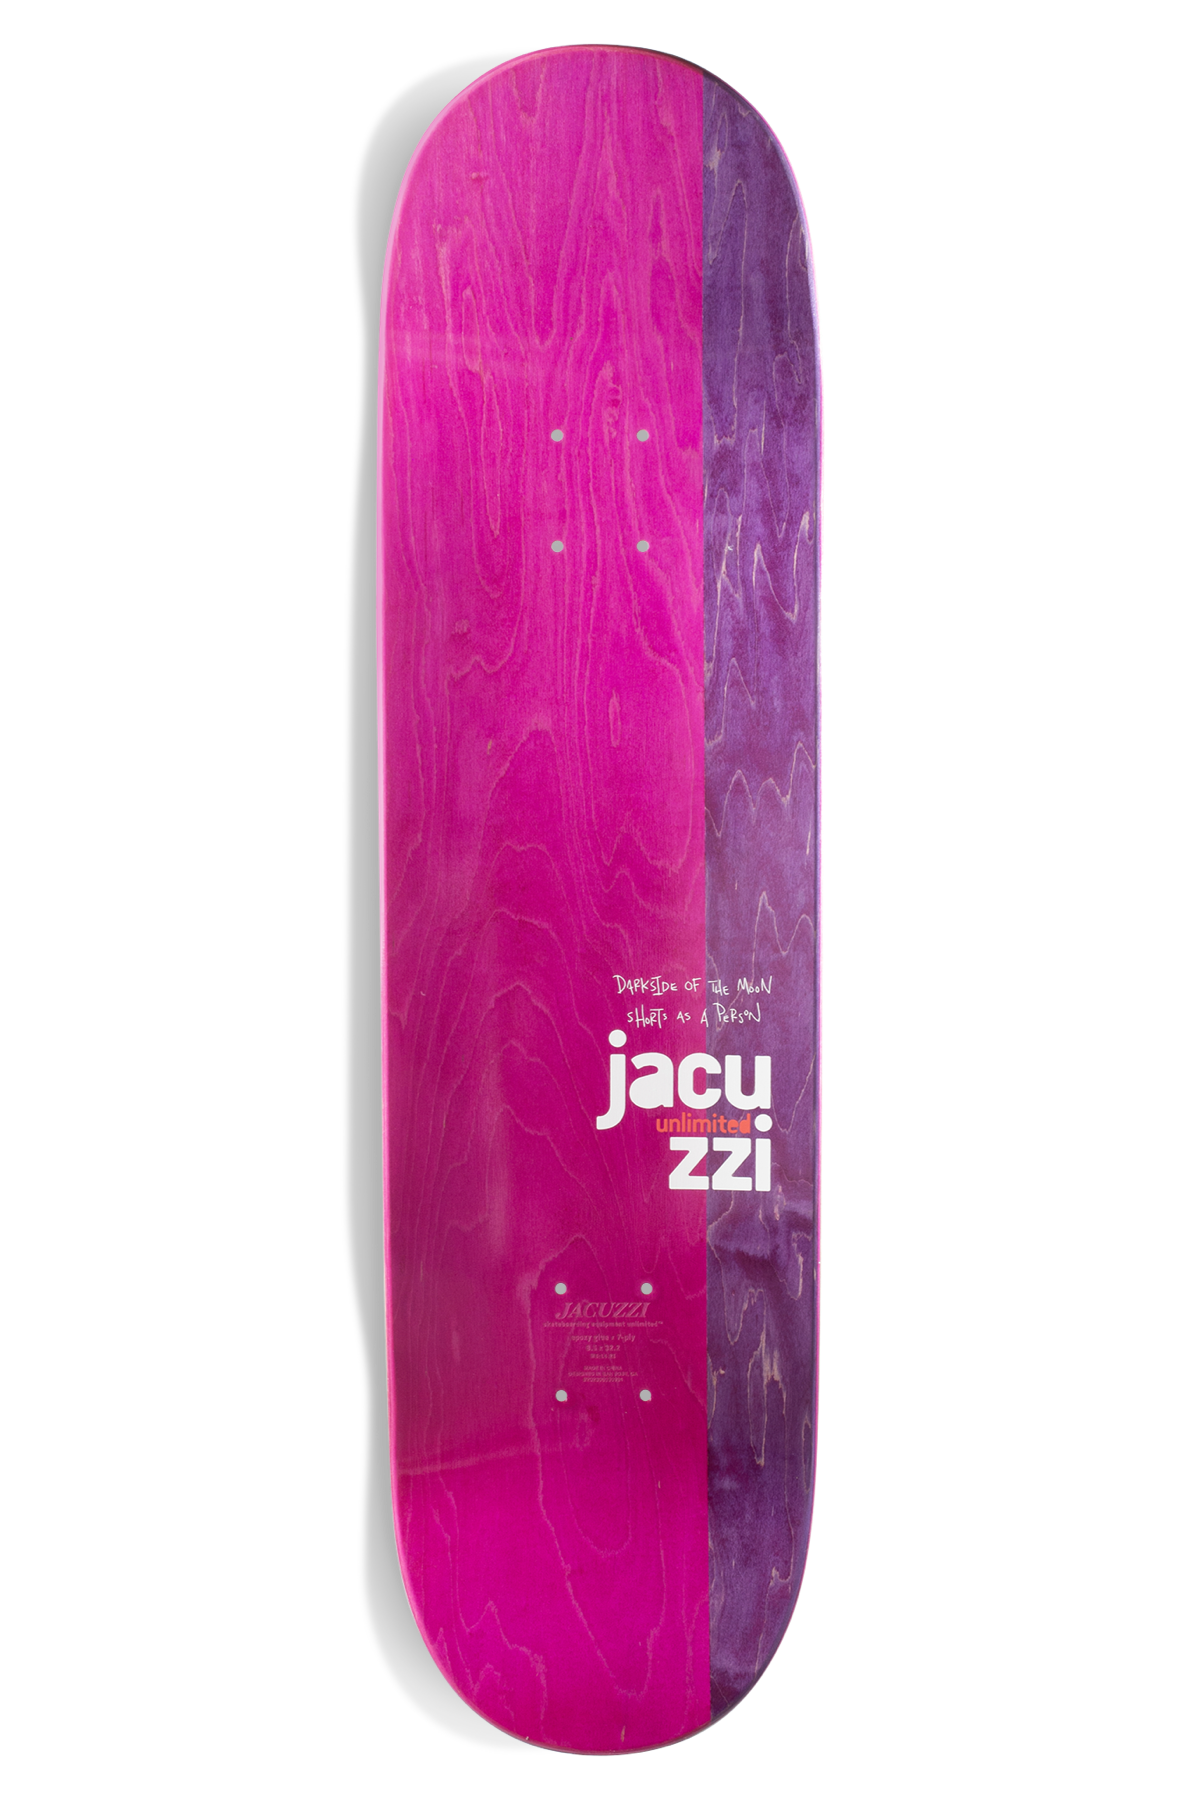 Jacuzzi Unlimited Louie Barletta Great Escape Ex7 Skateboard Deck - 8.5"